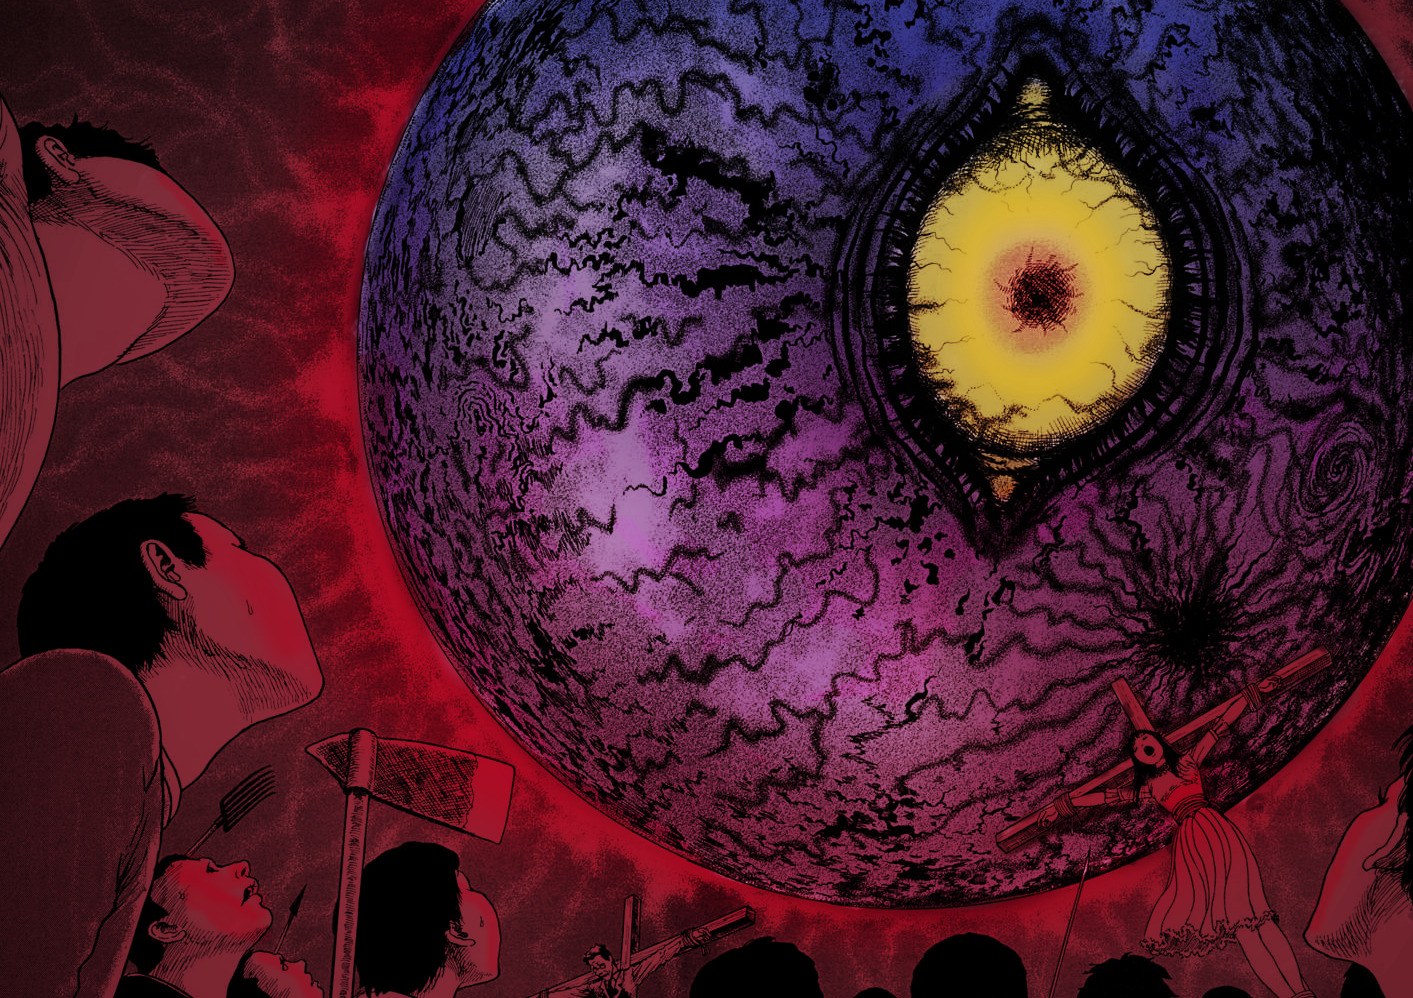 10 Weird Sci-Fi Or Horror Manga Series For Fans Of Hellstar Remina